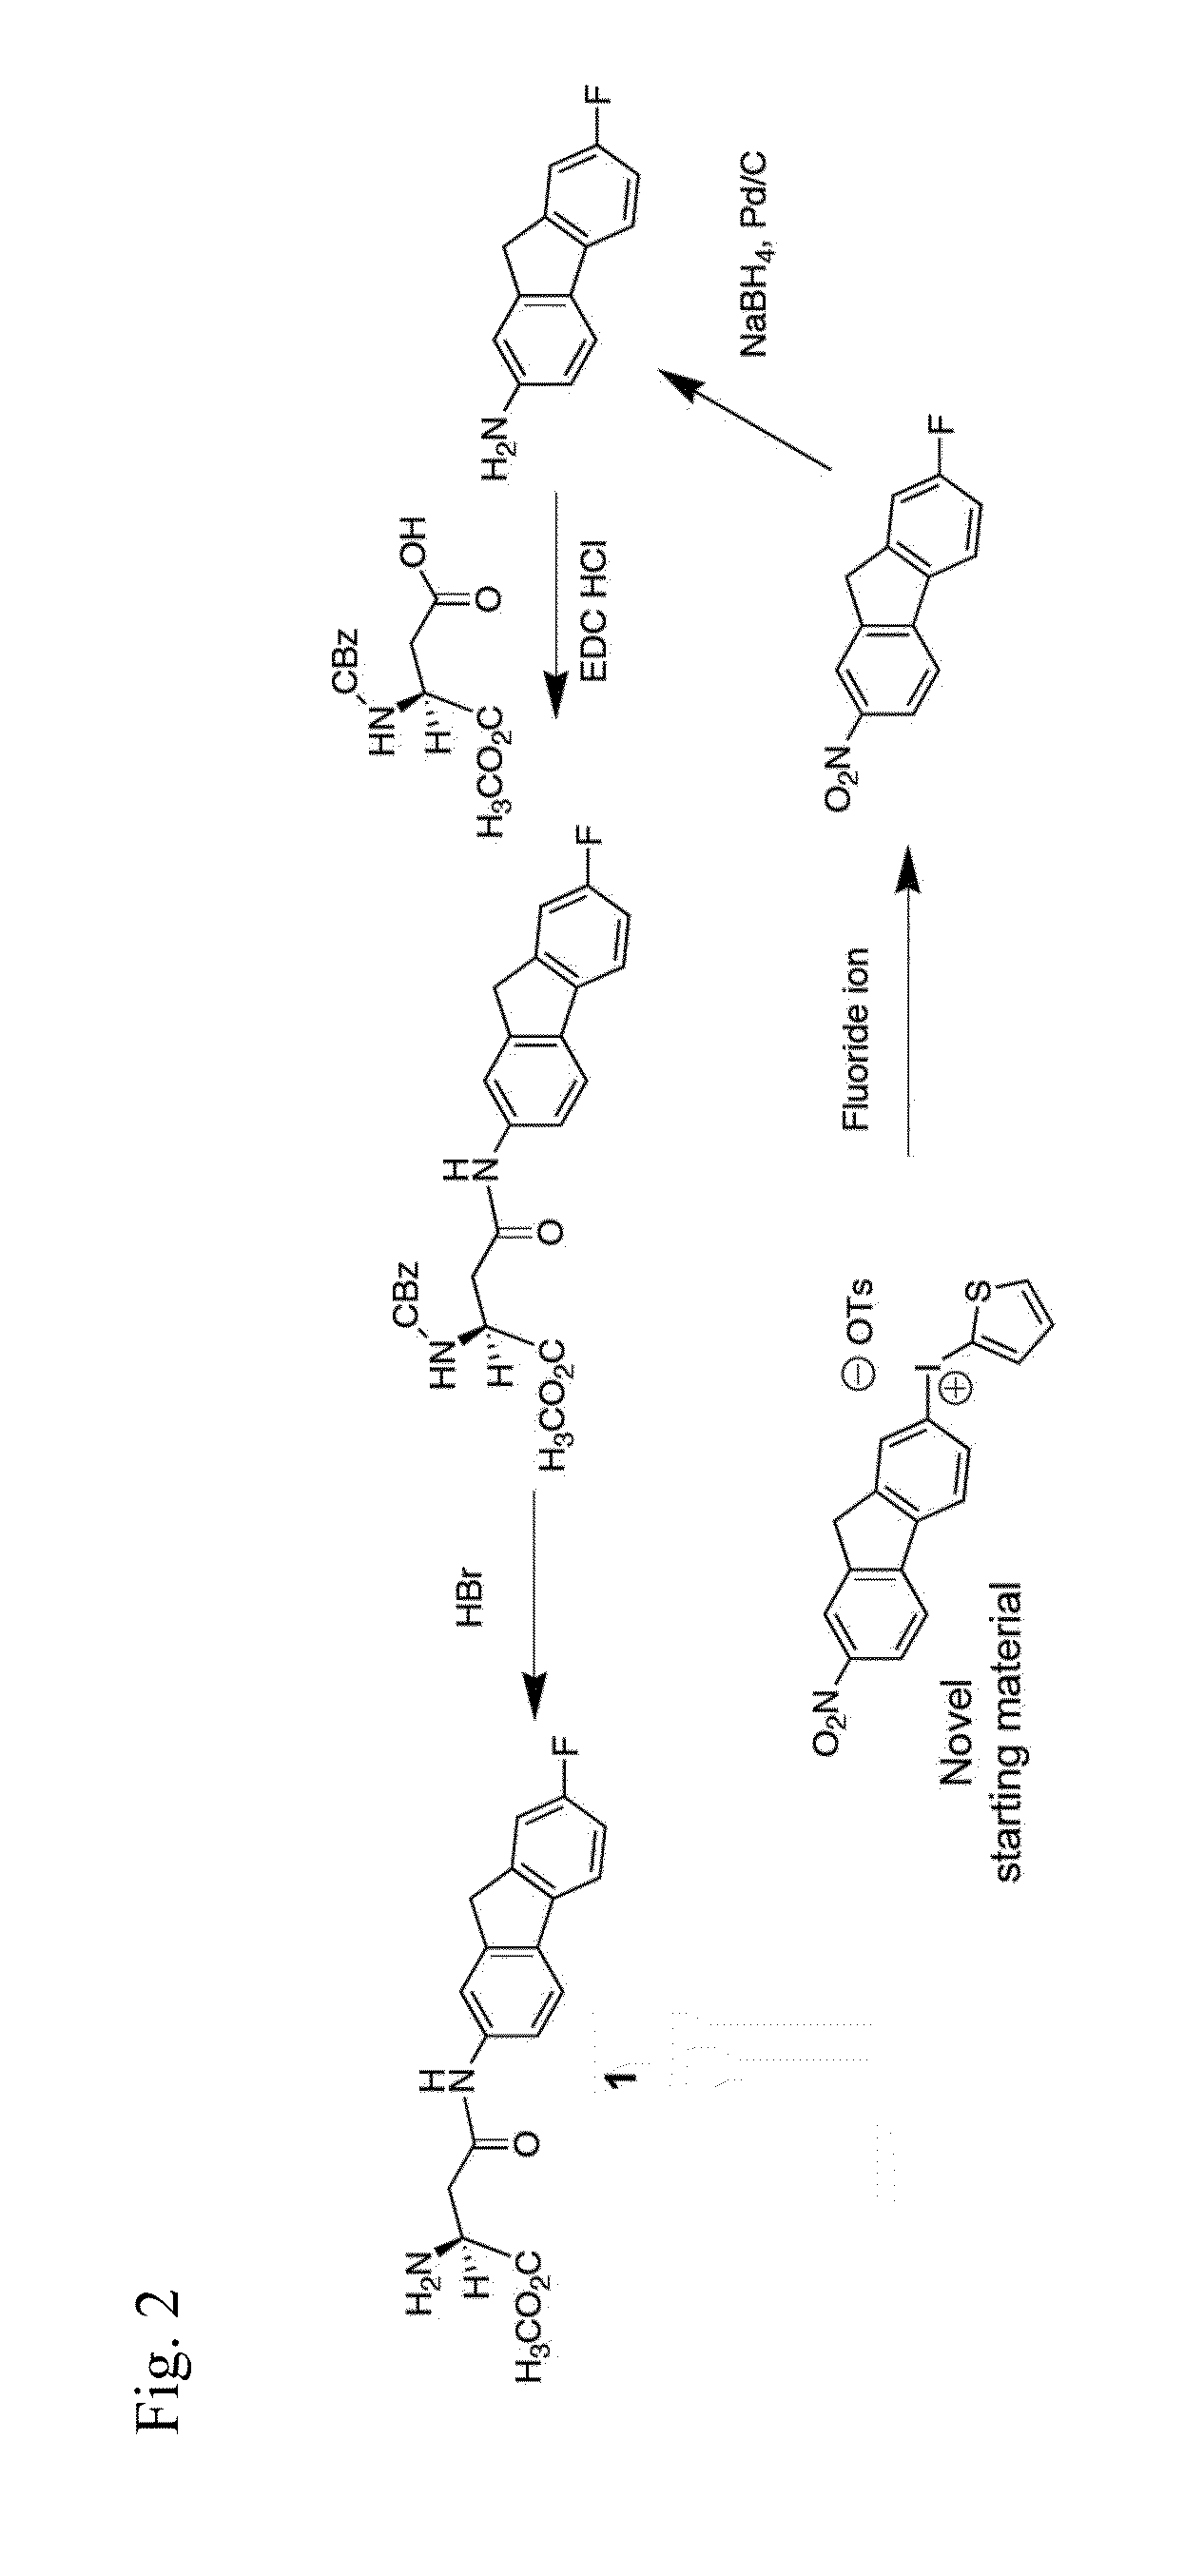 Novel Aspartylamide Inhibitors of Excitatory Amino Acid Transporters